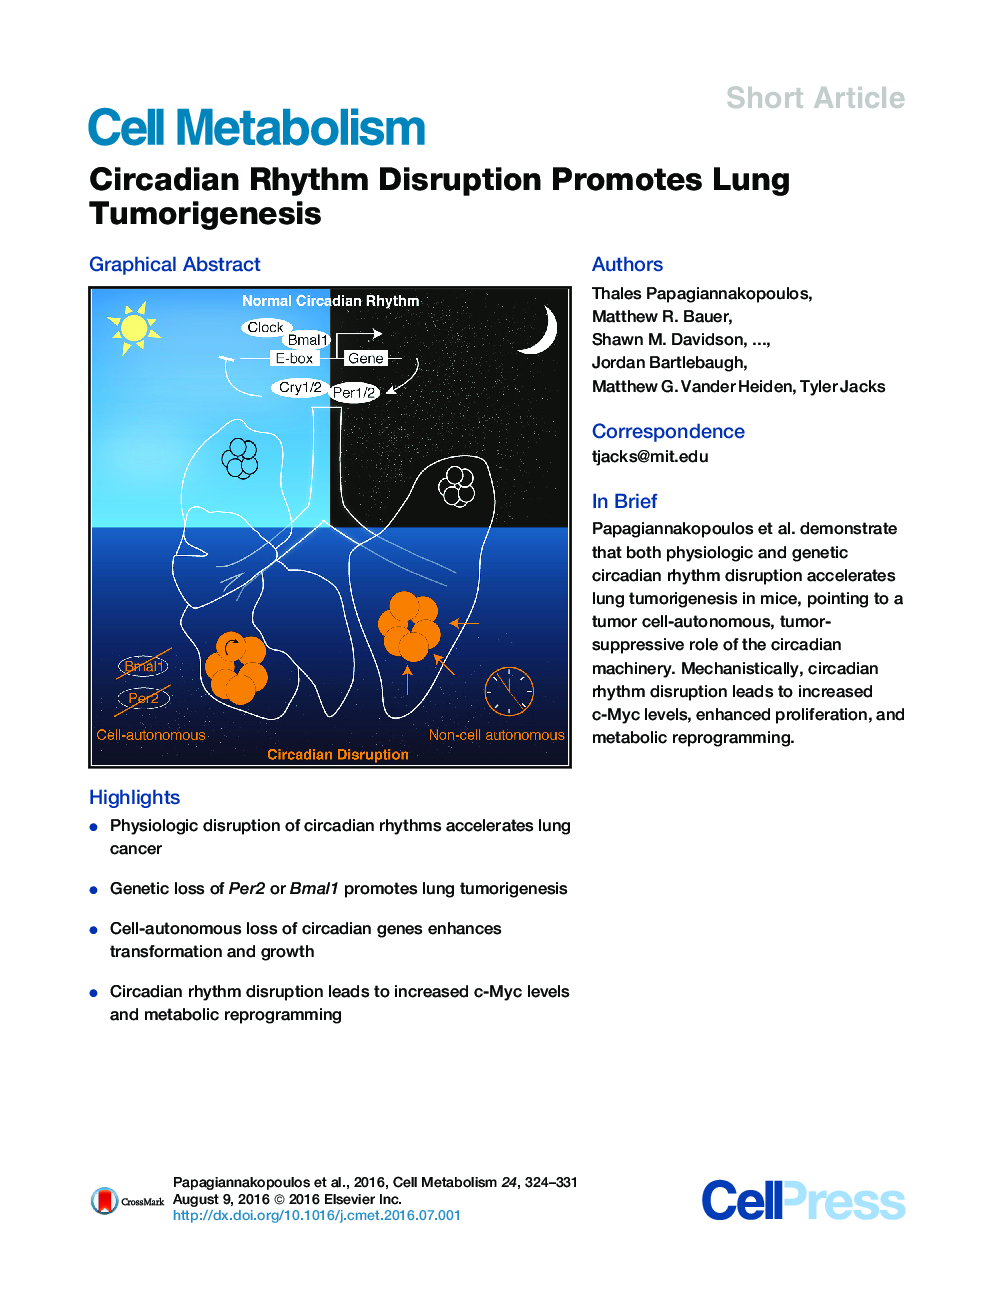 Circadian Rhythm Disruption Promotes Lung Tumorigenesis